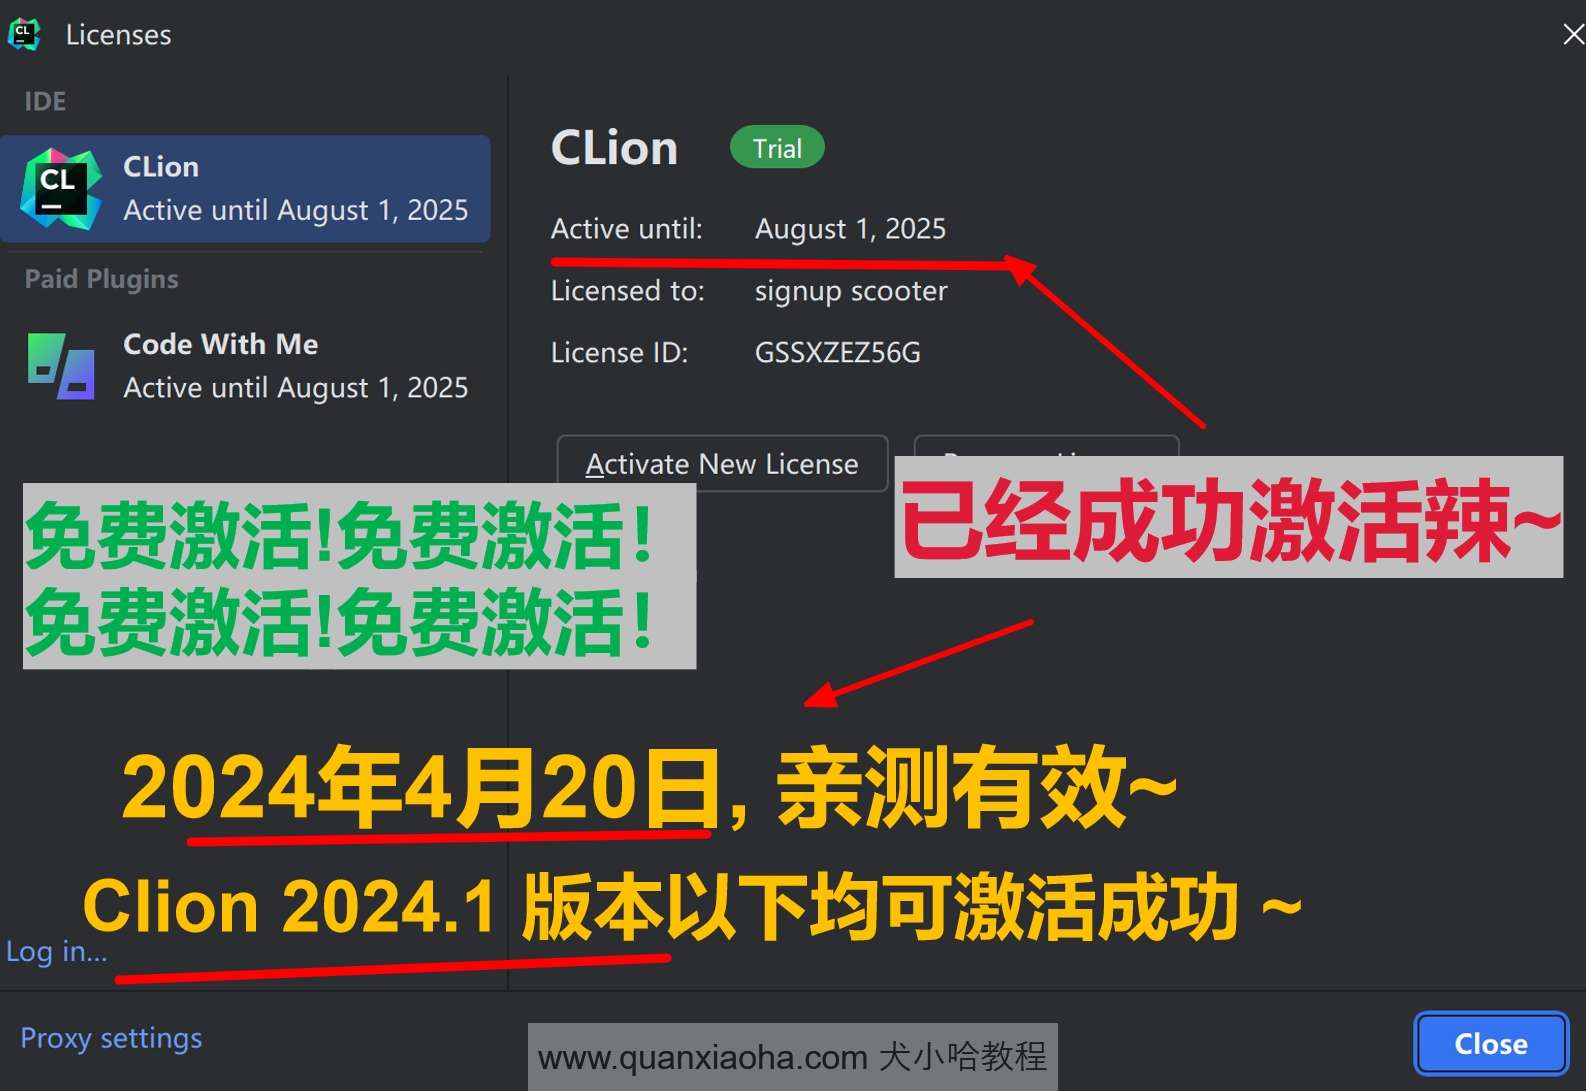 Clion 2024.1 版本启动界面